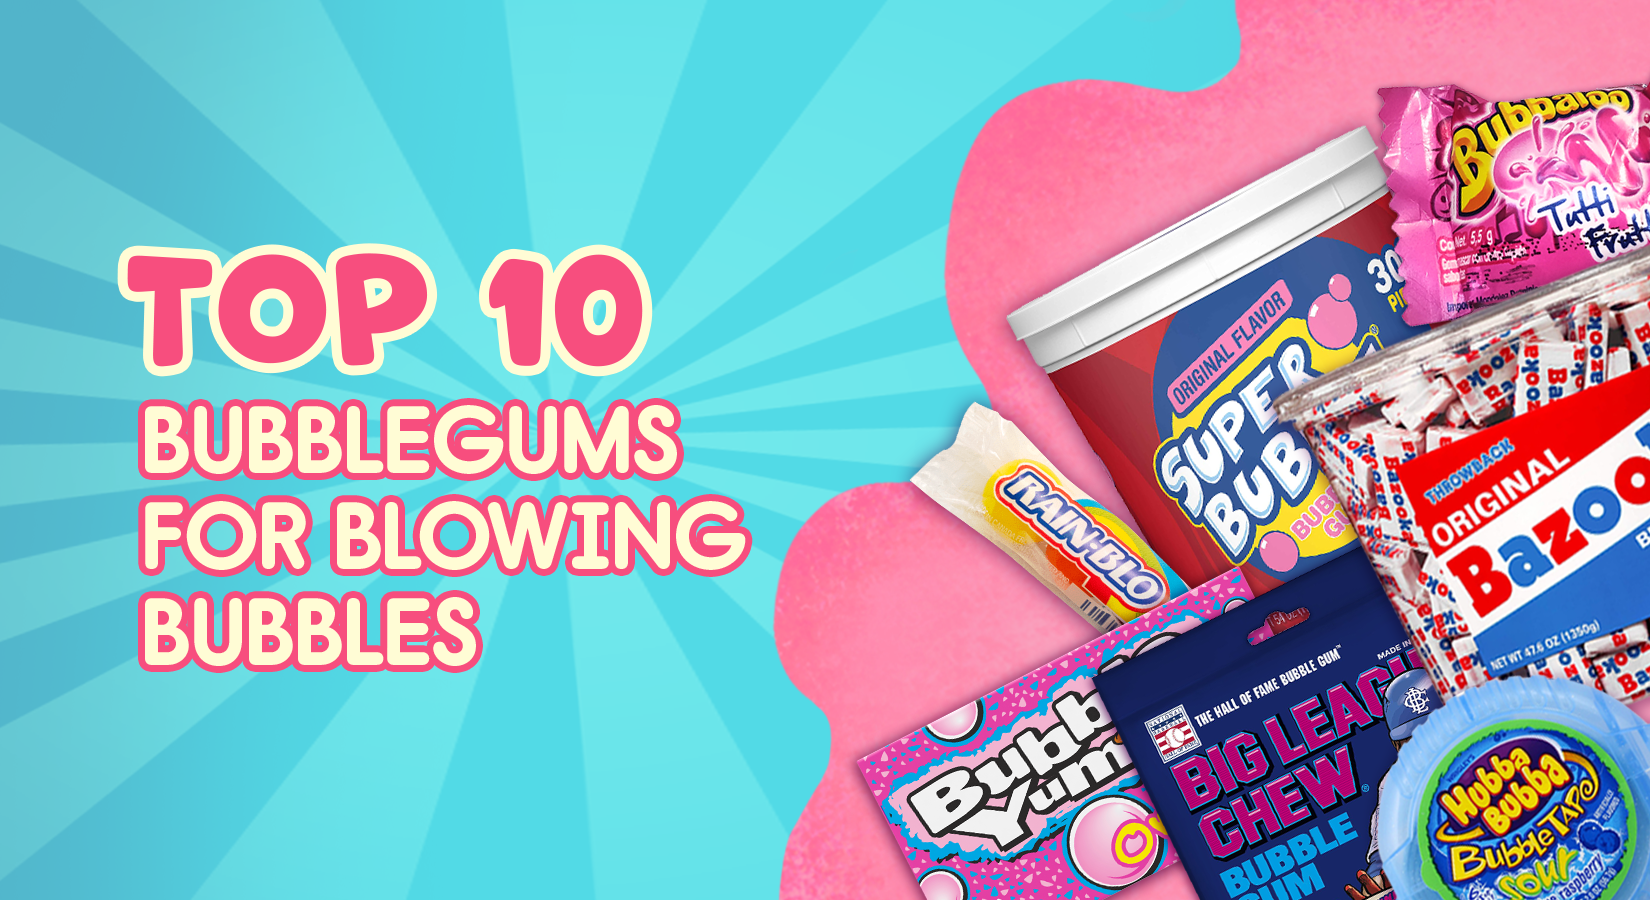 The Top 10 Bubblegum for Blowing Bubbles